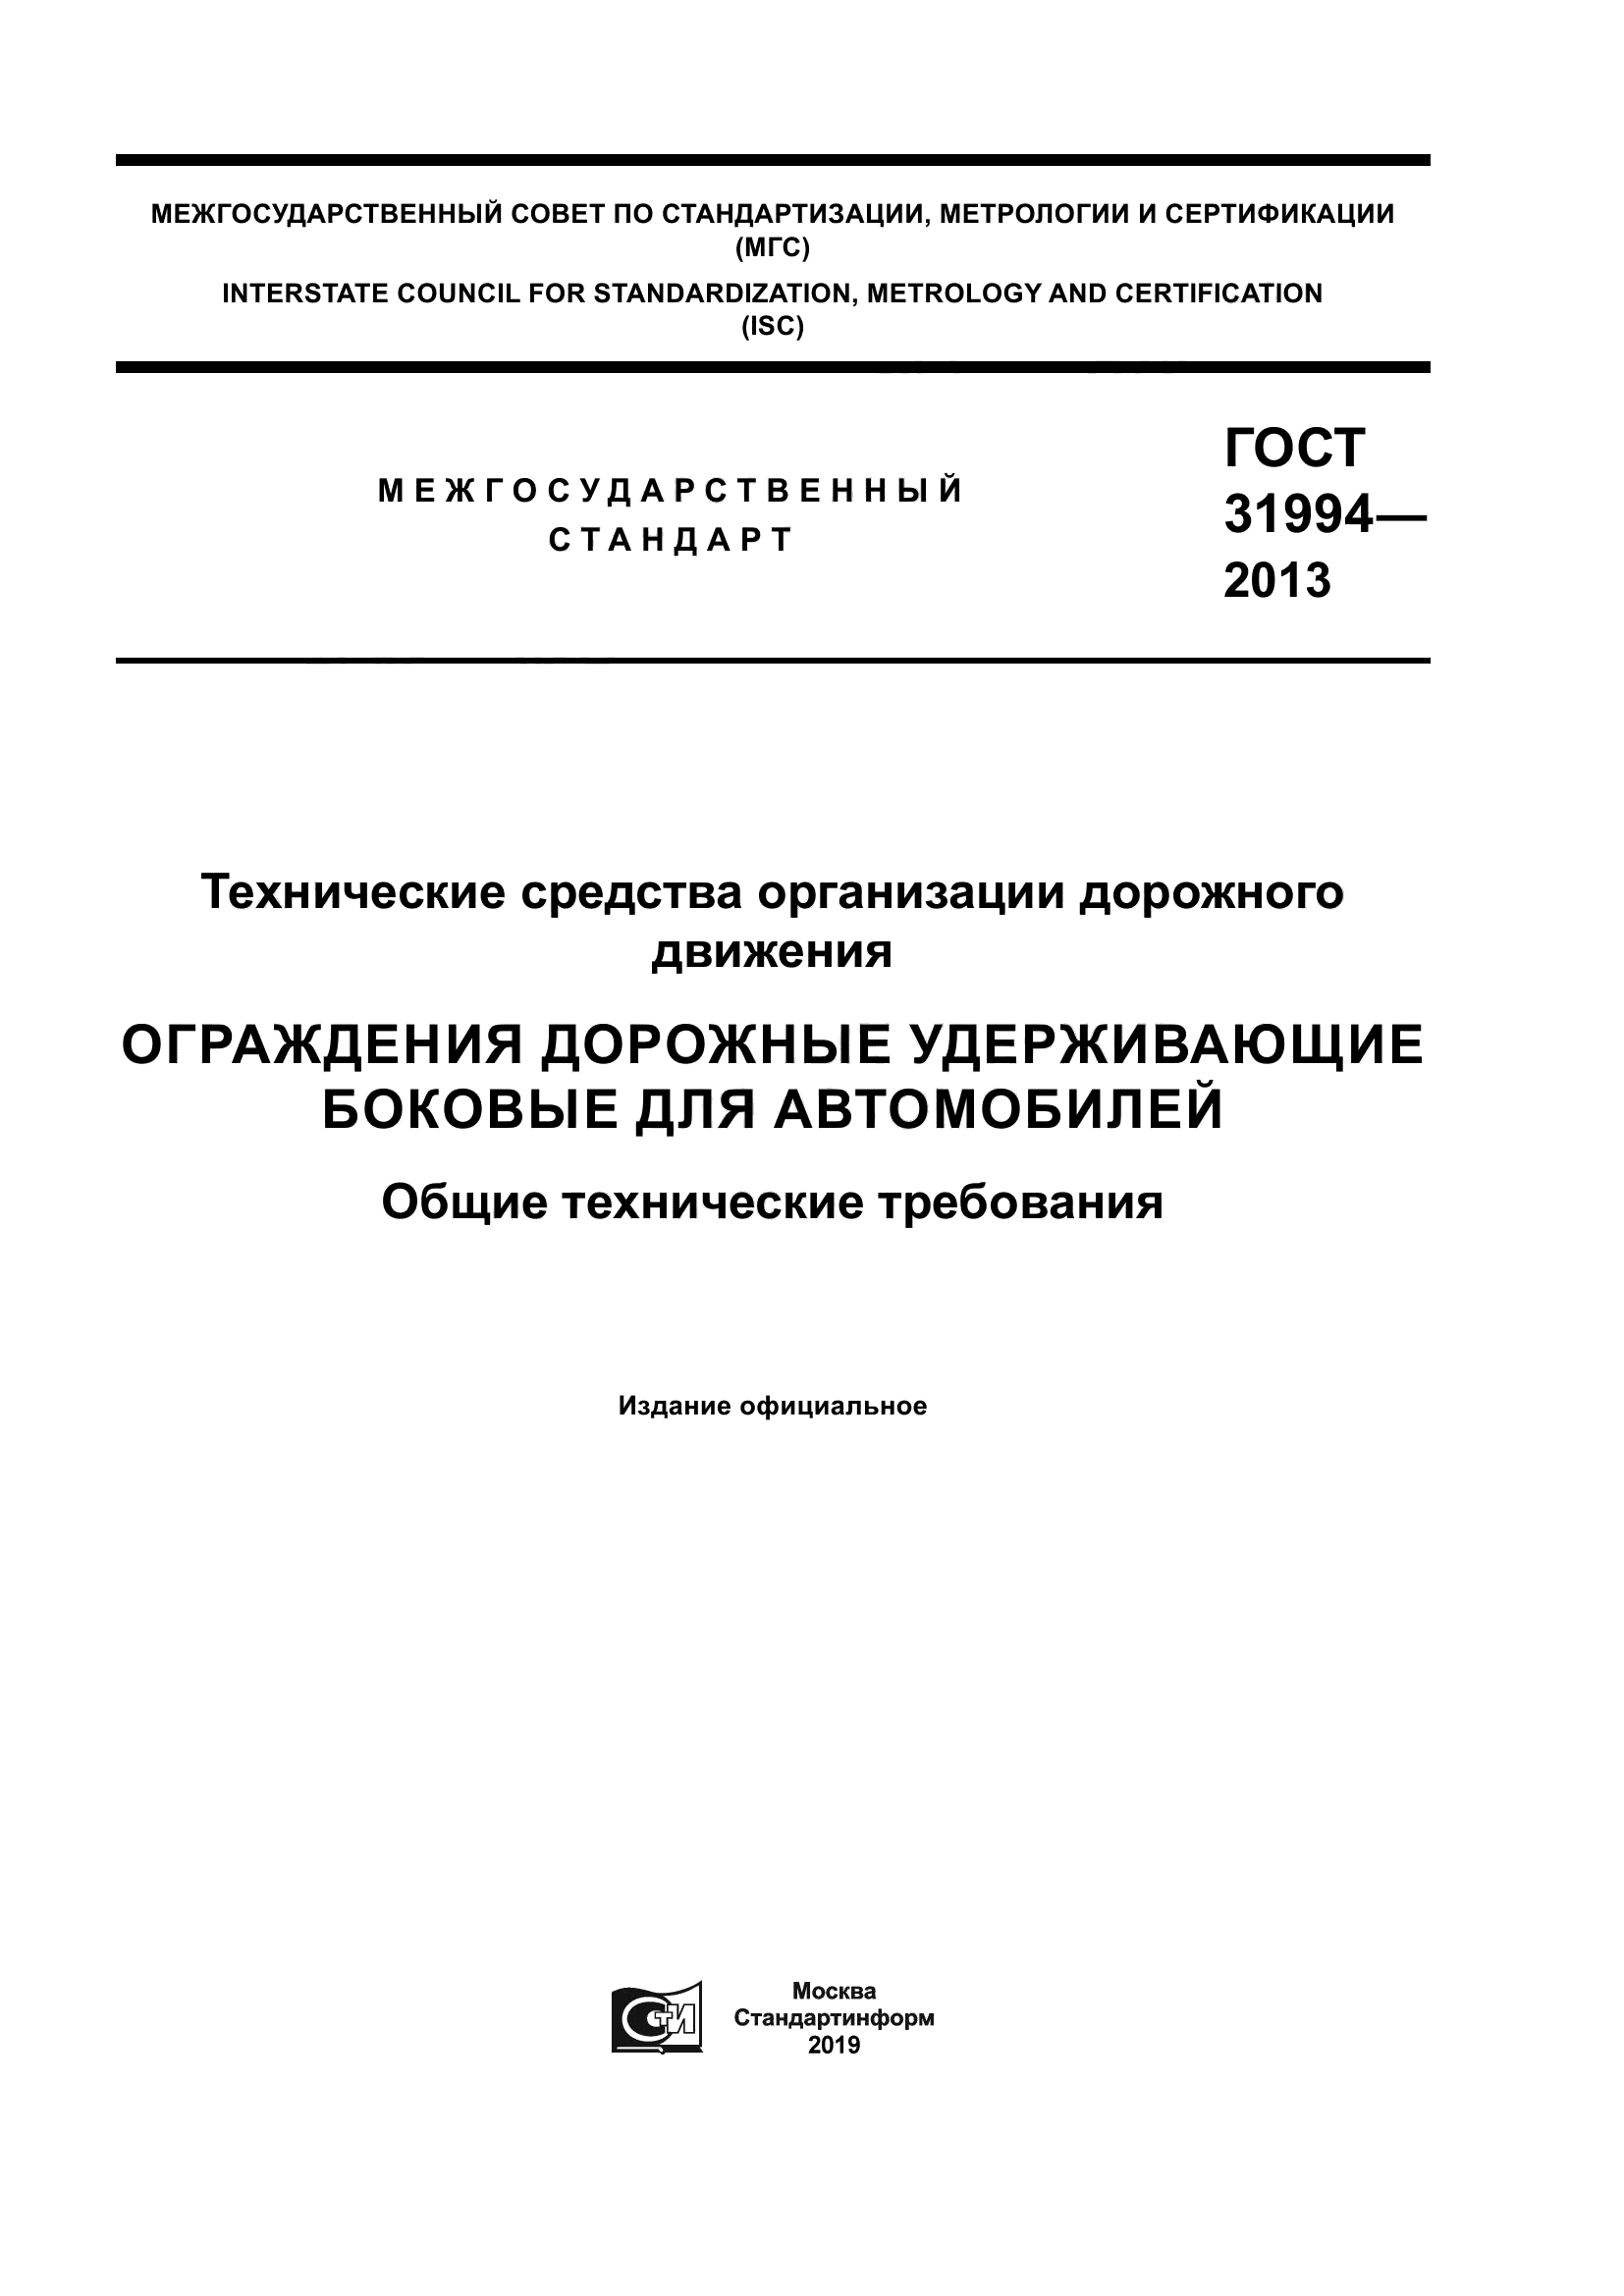 ГОСТ 31994-2013